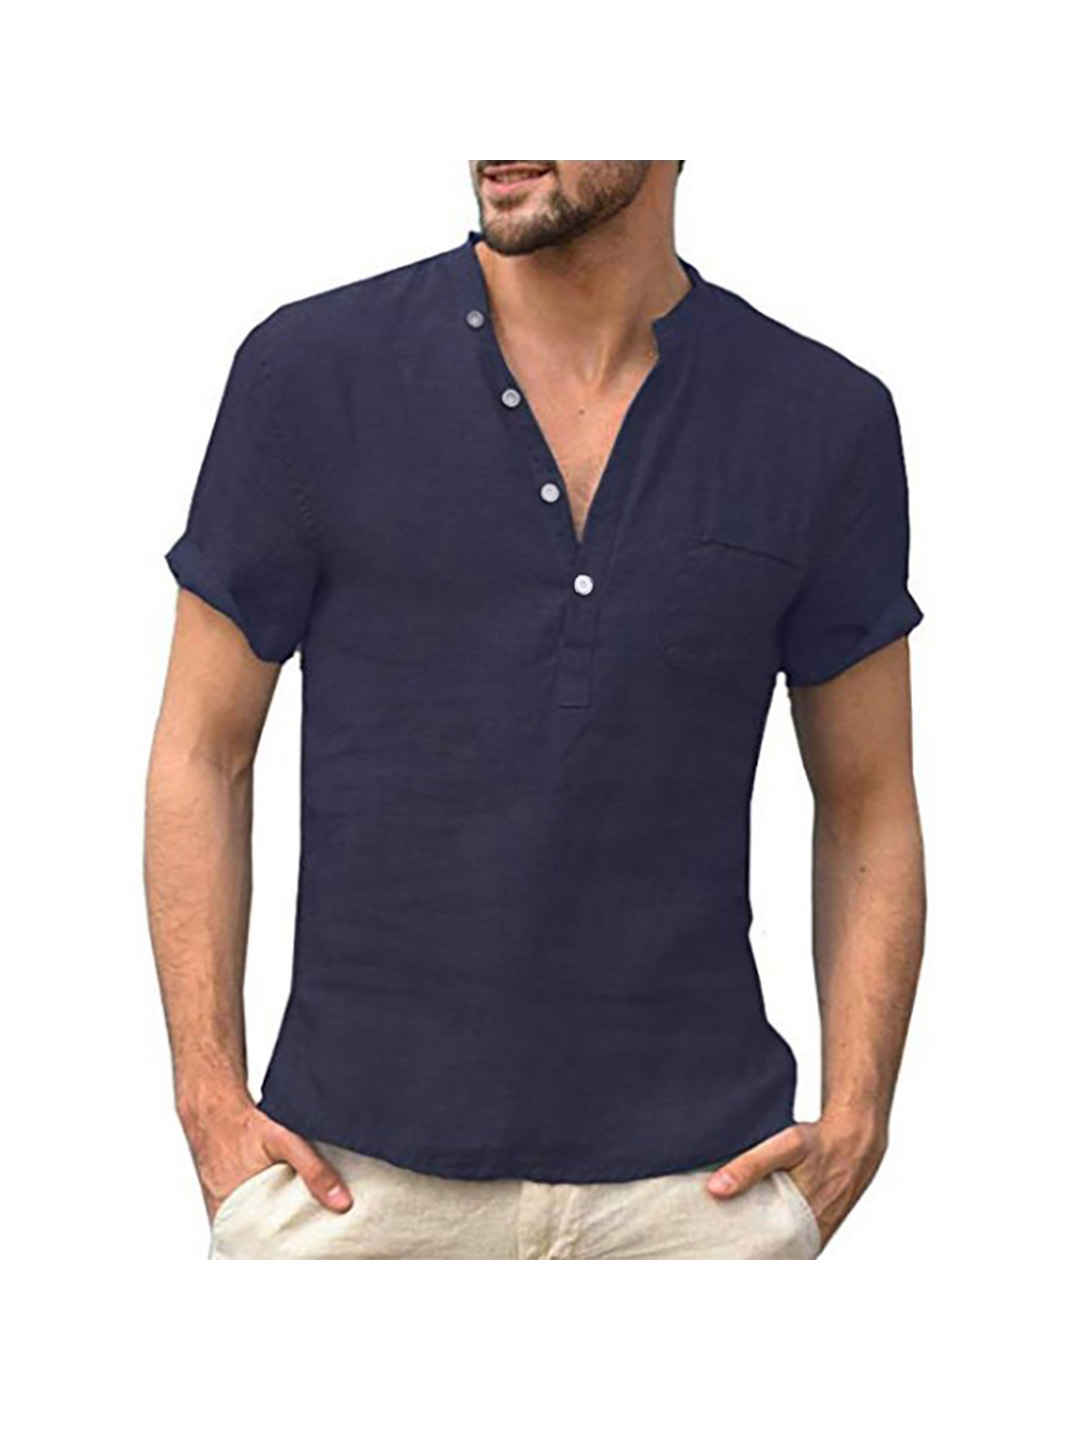 Men's Gordon Solid Color Shirt-poisonstreetwear.com